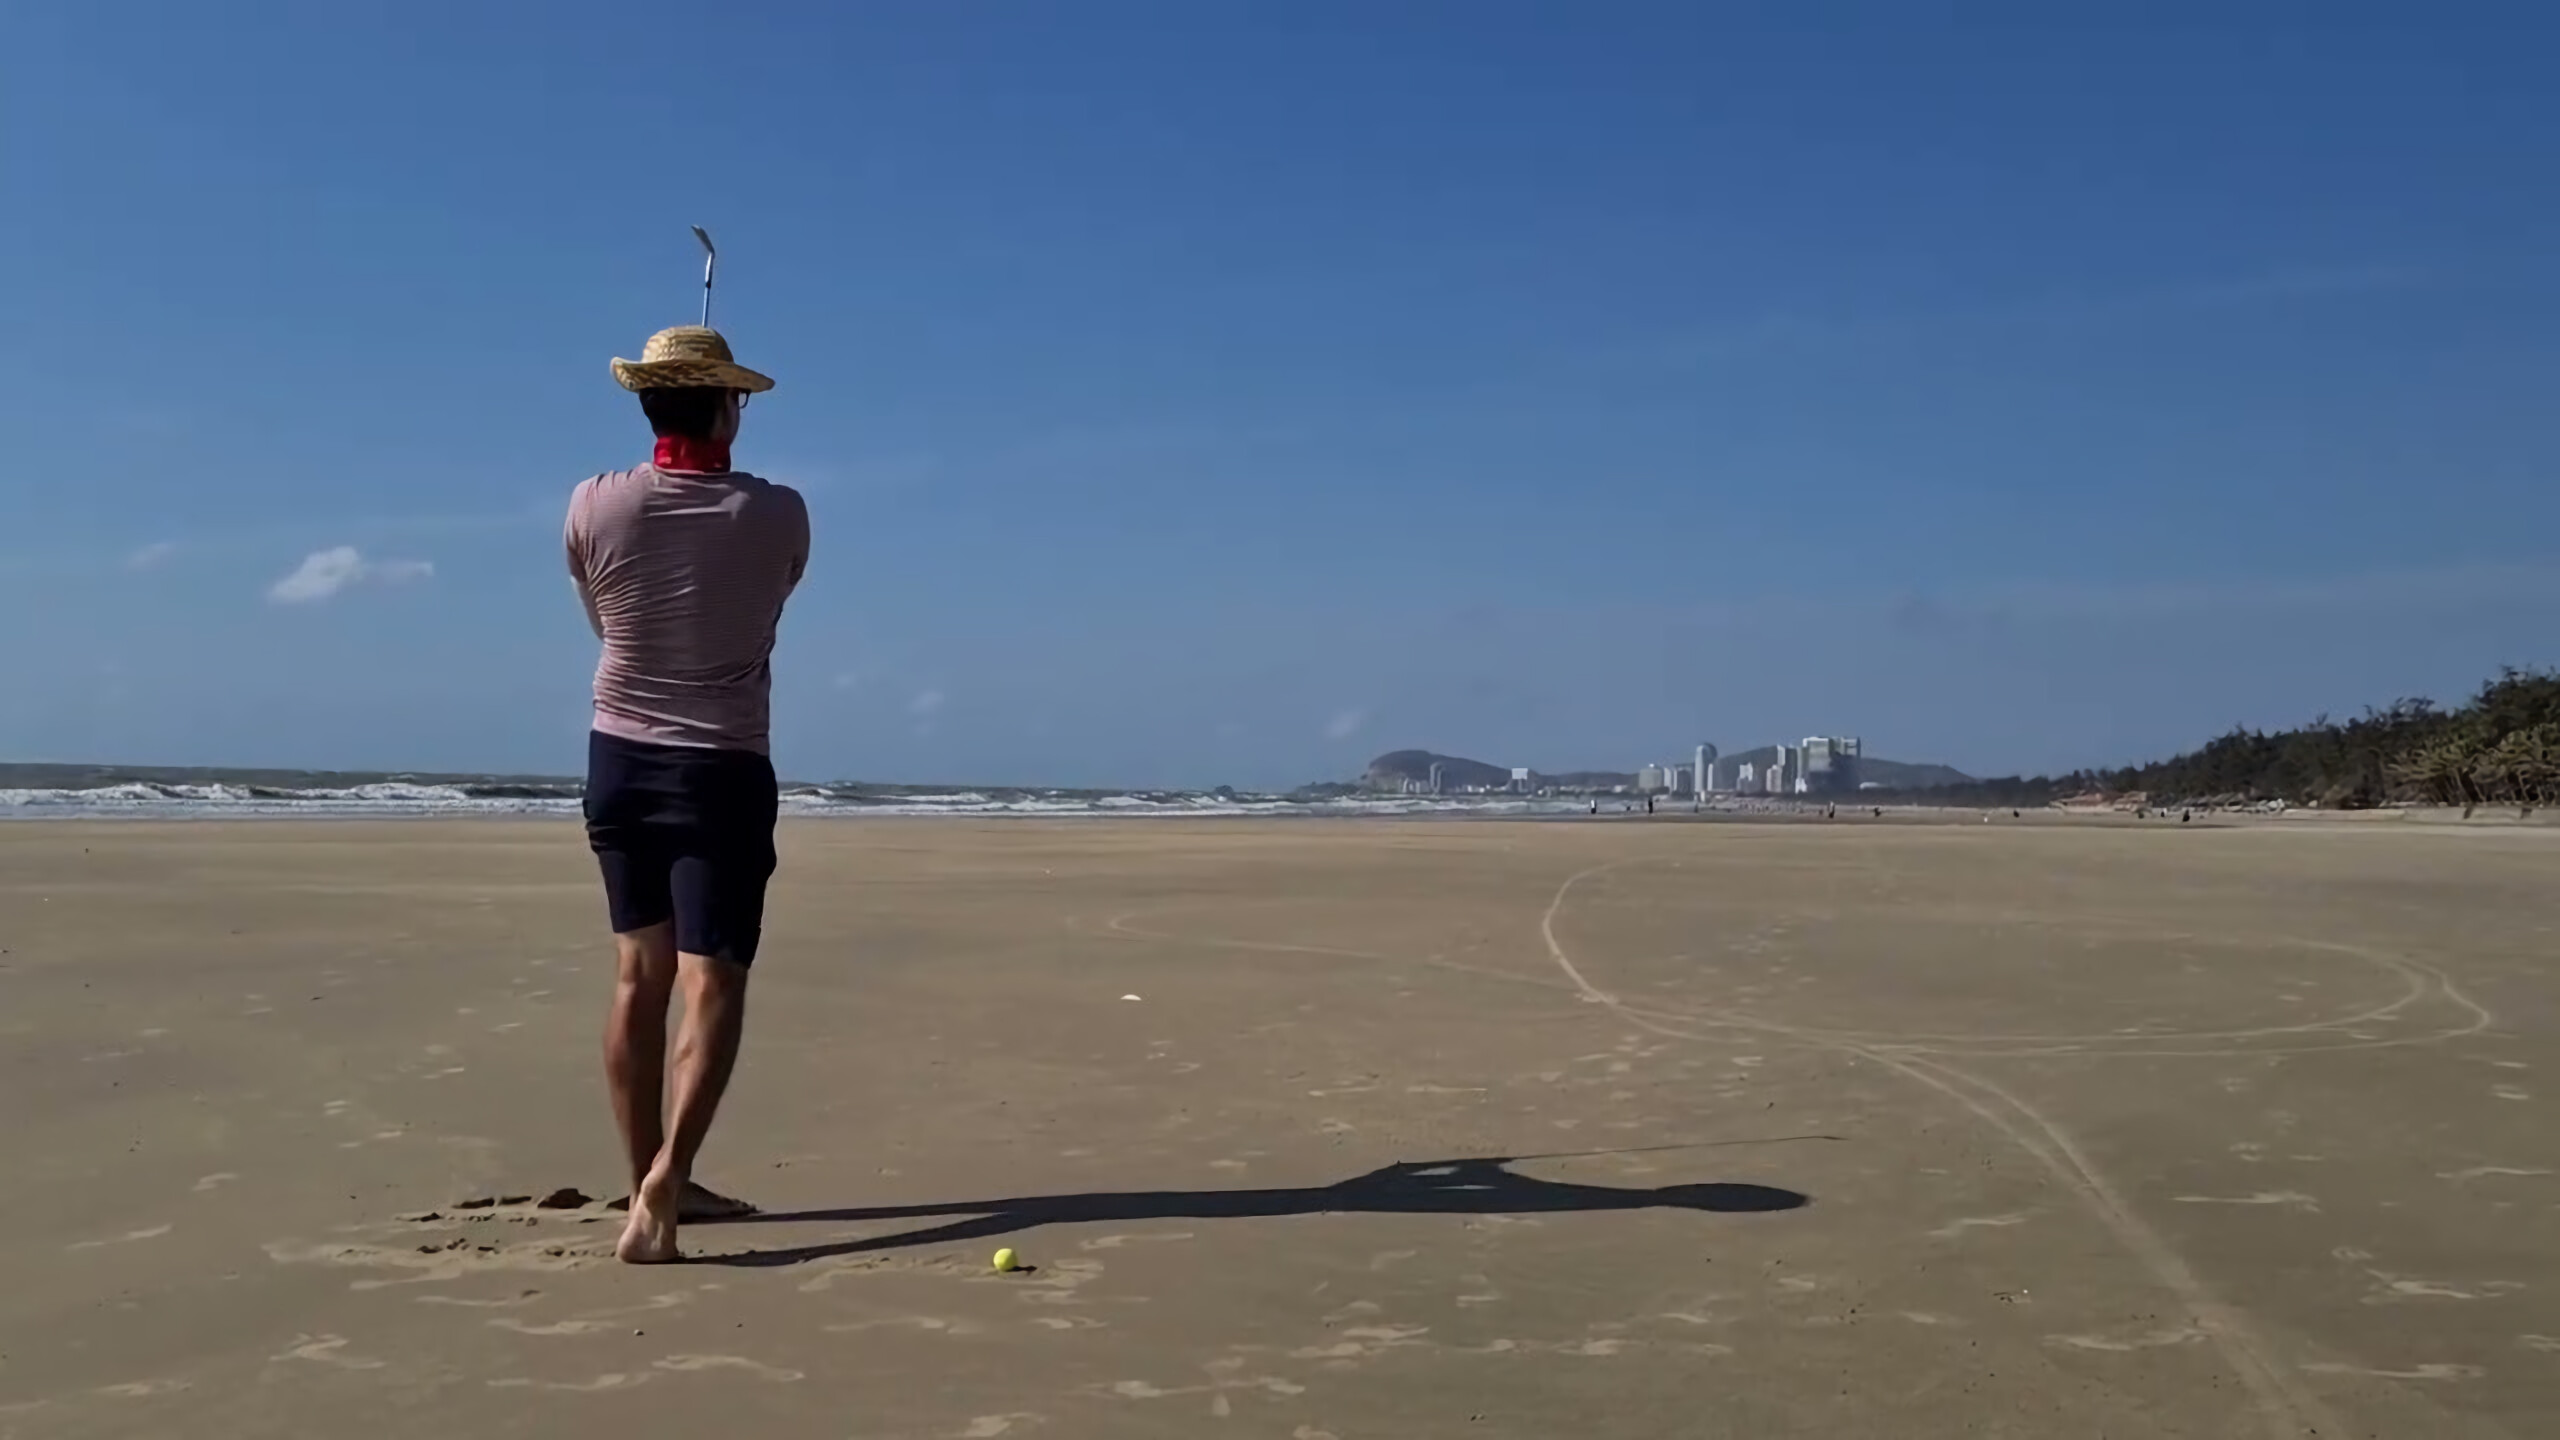 Beach Golf: Played with a soft polyurethane ball with a classic golf club. 2560x1440 HD Wallpaper.